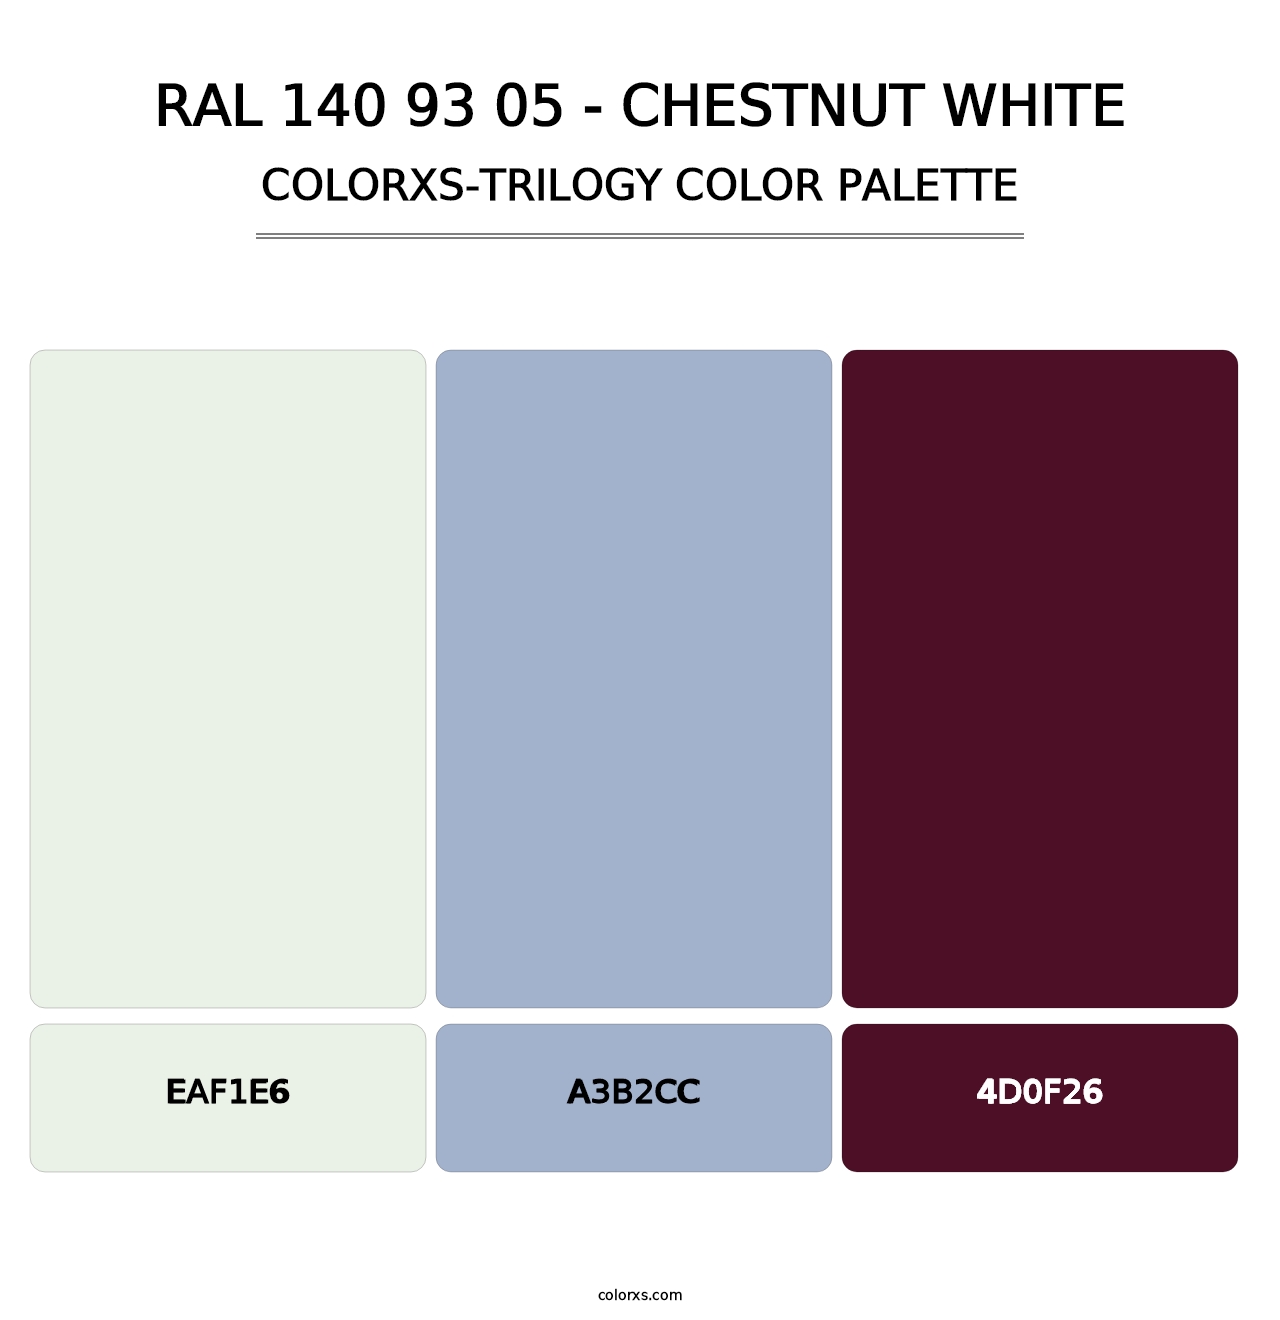 RAL 140 93 05 - Chestnut White - Colorxs Trilogy Palette